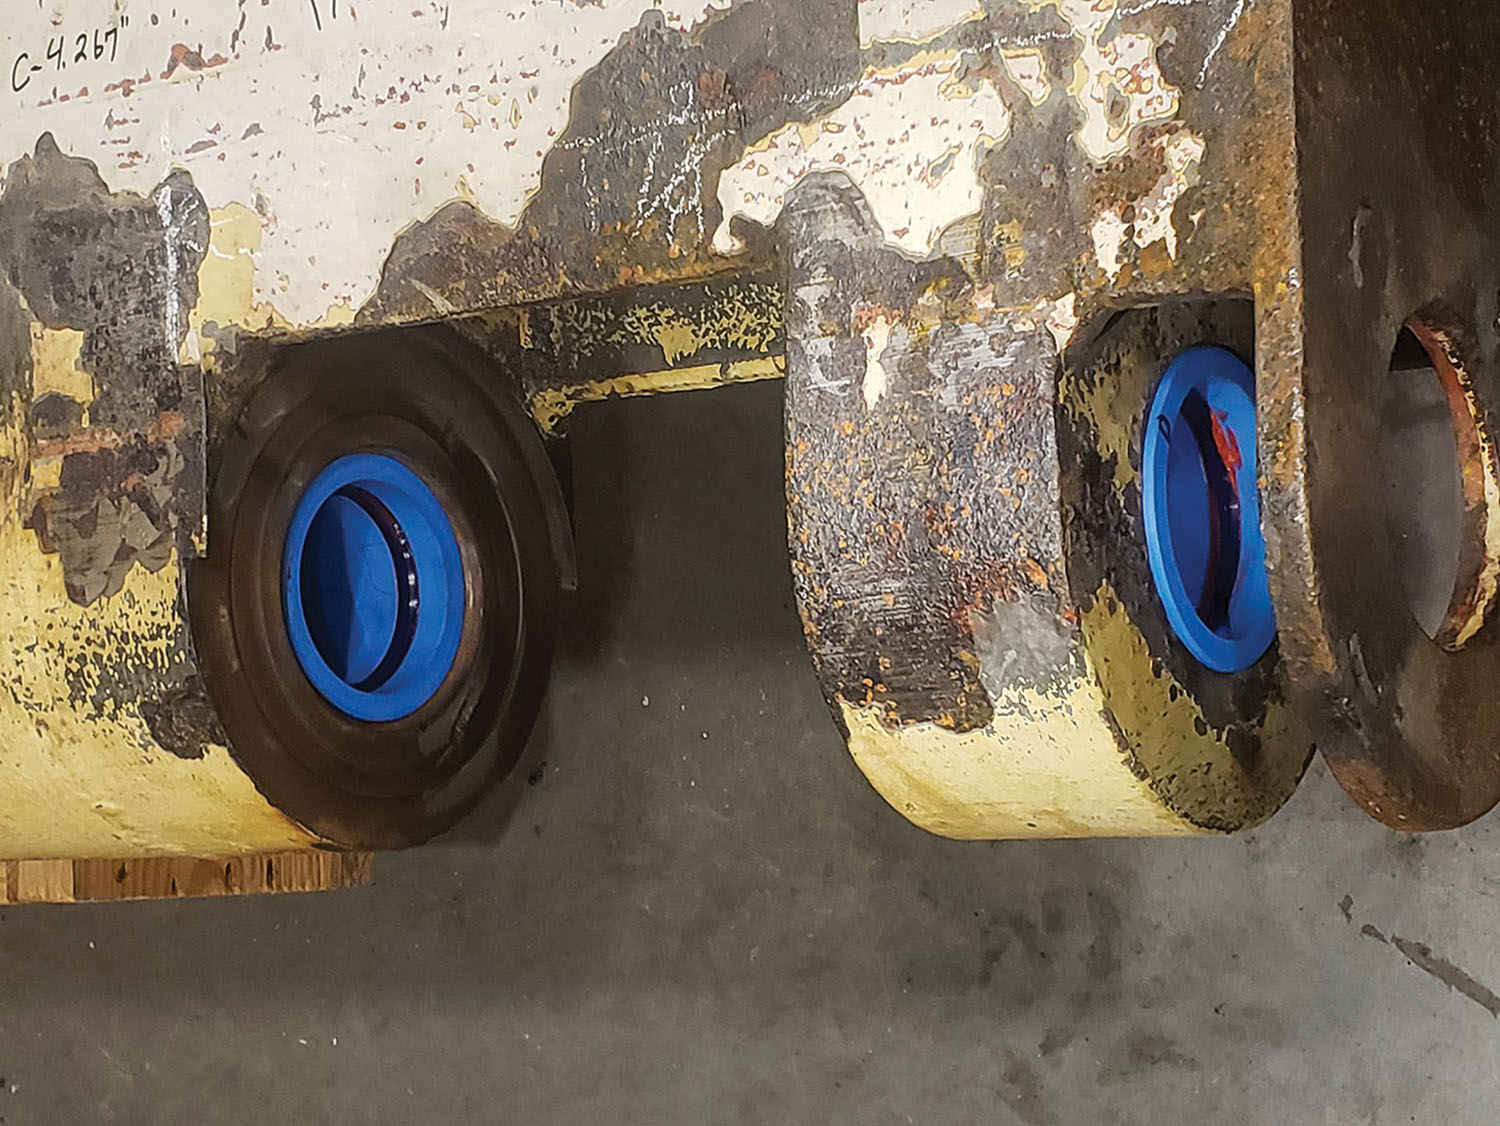 ThorPlas-Blue bearings installed in an articulating rudder.